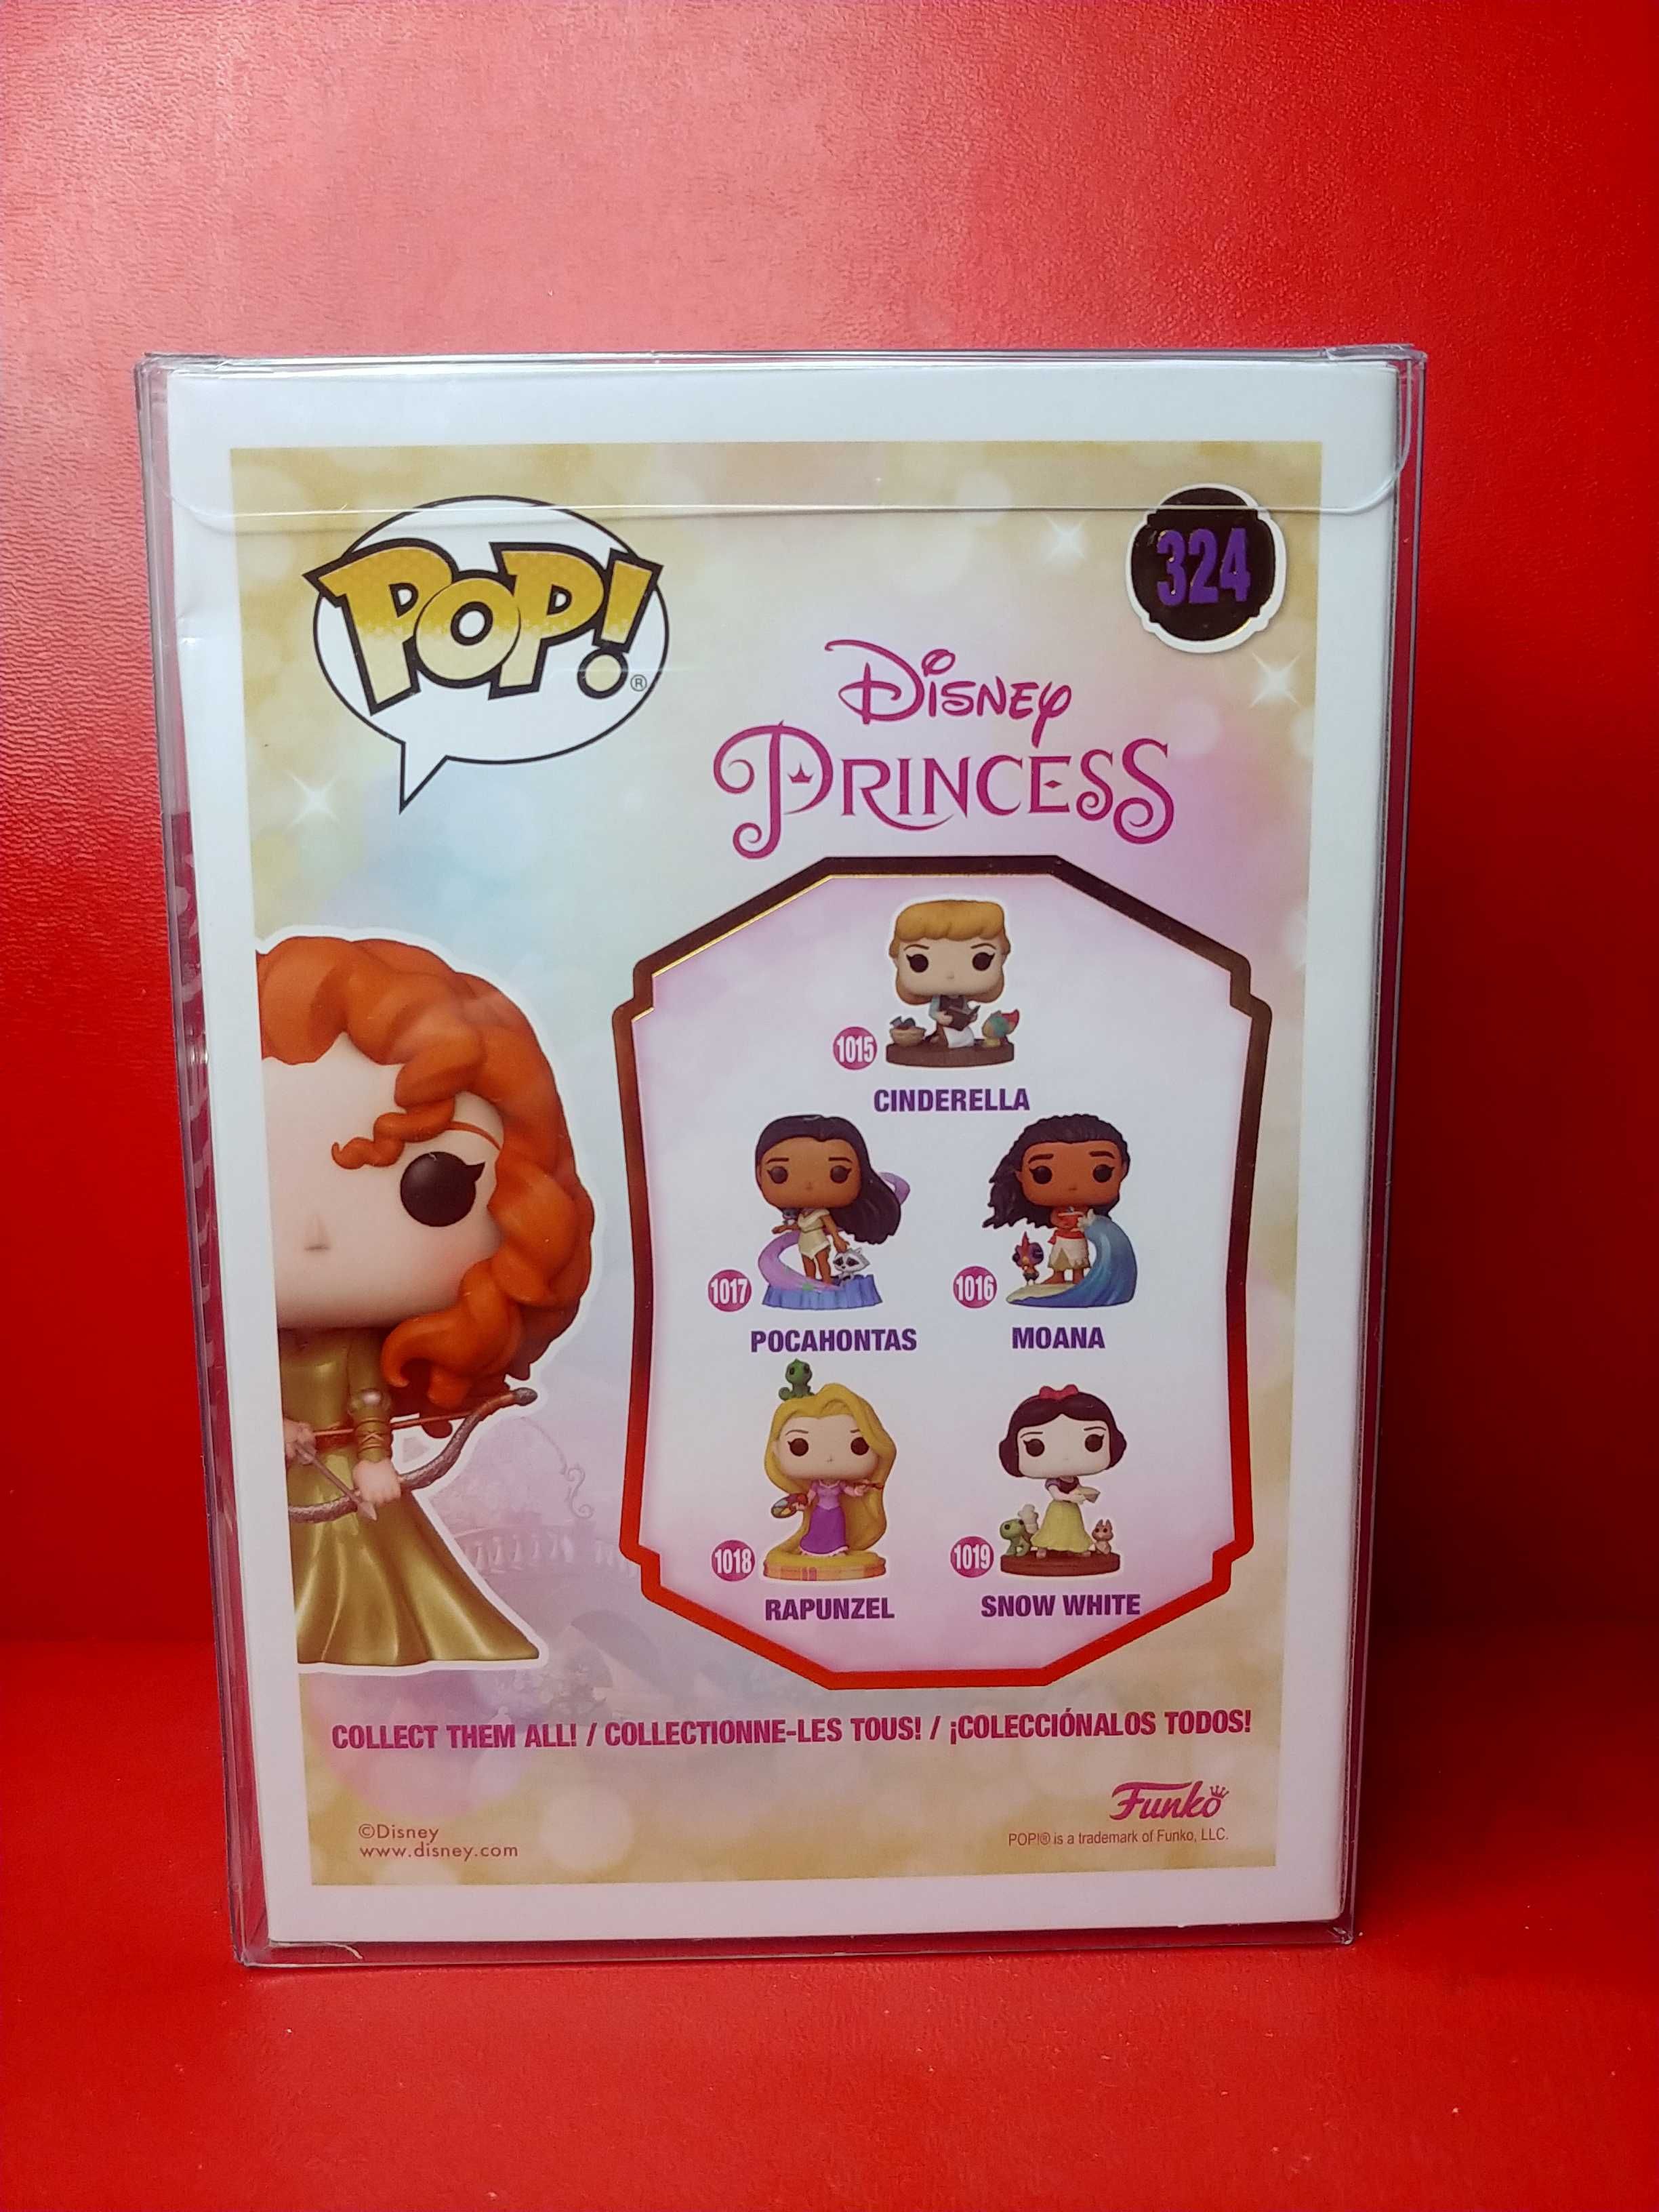 Funko pop Merida with pin figurka, Disney princess, exclusive 324